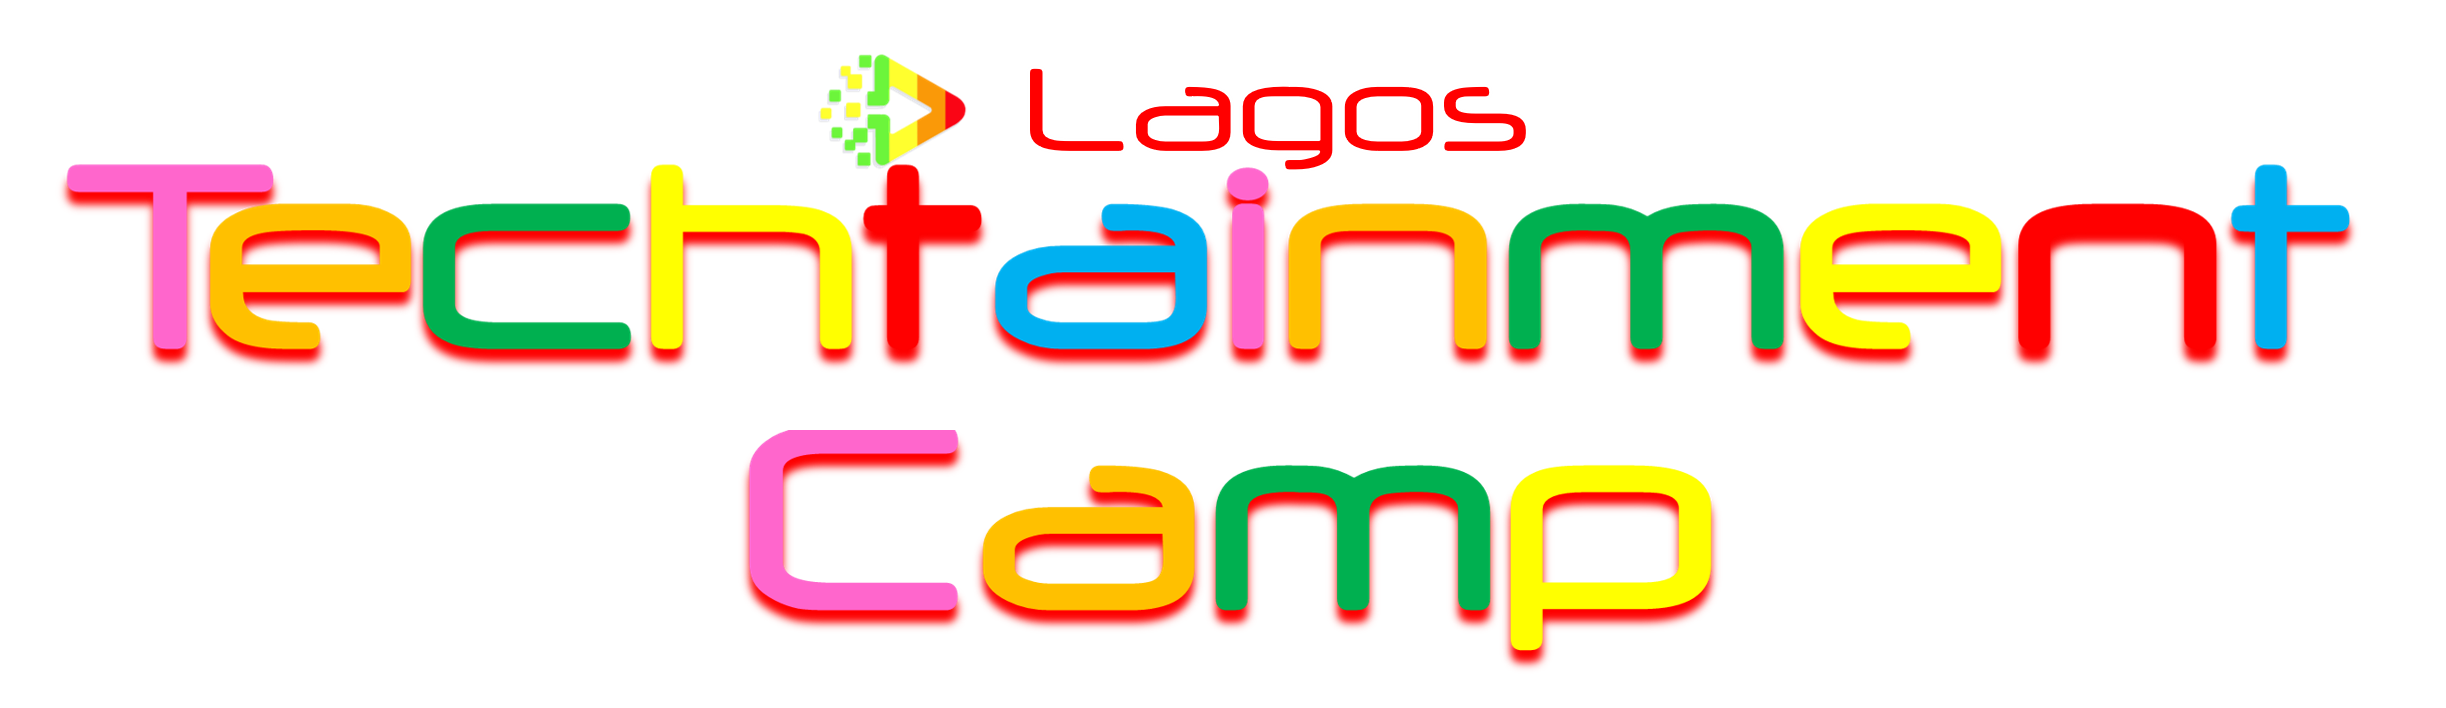 Lagos Techtainment Camp: Creativity Through Technology and Entertainment